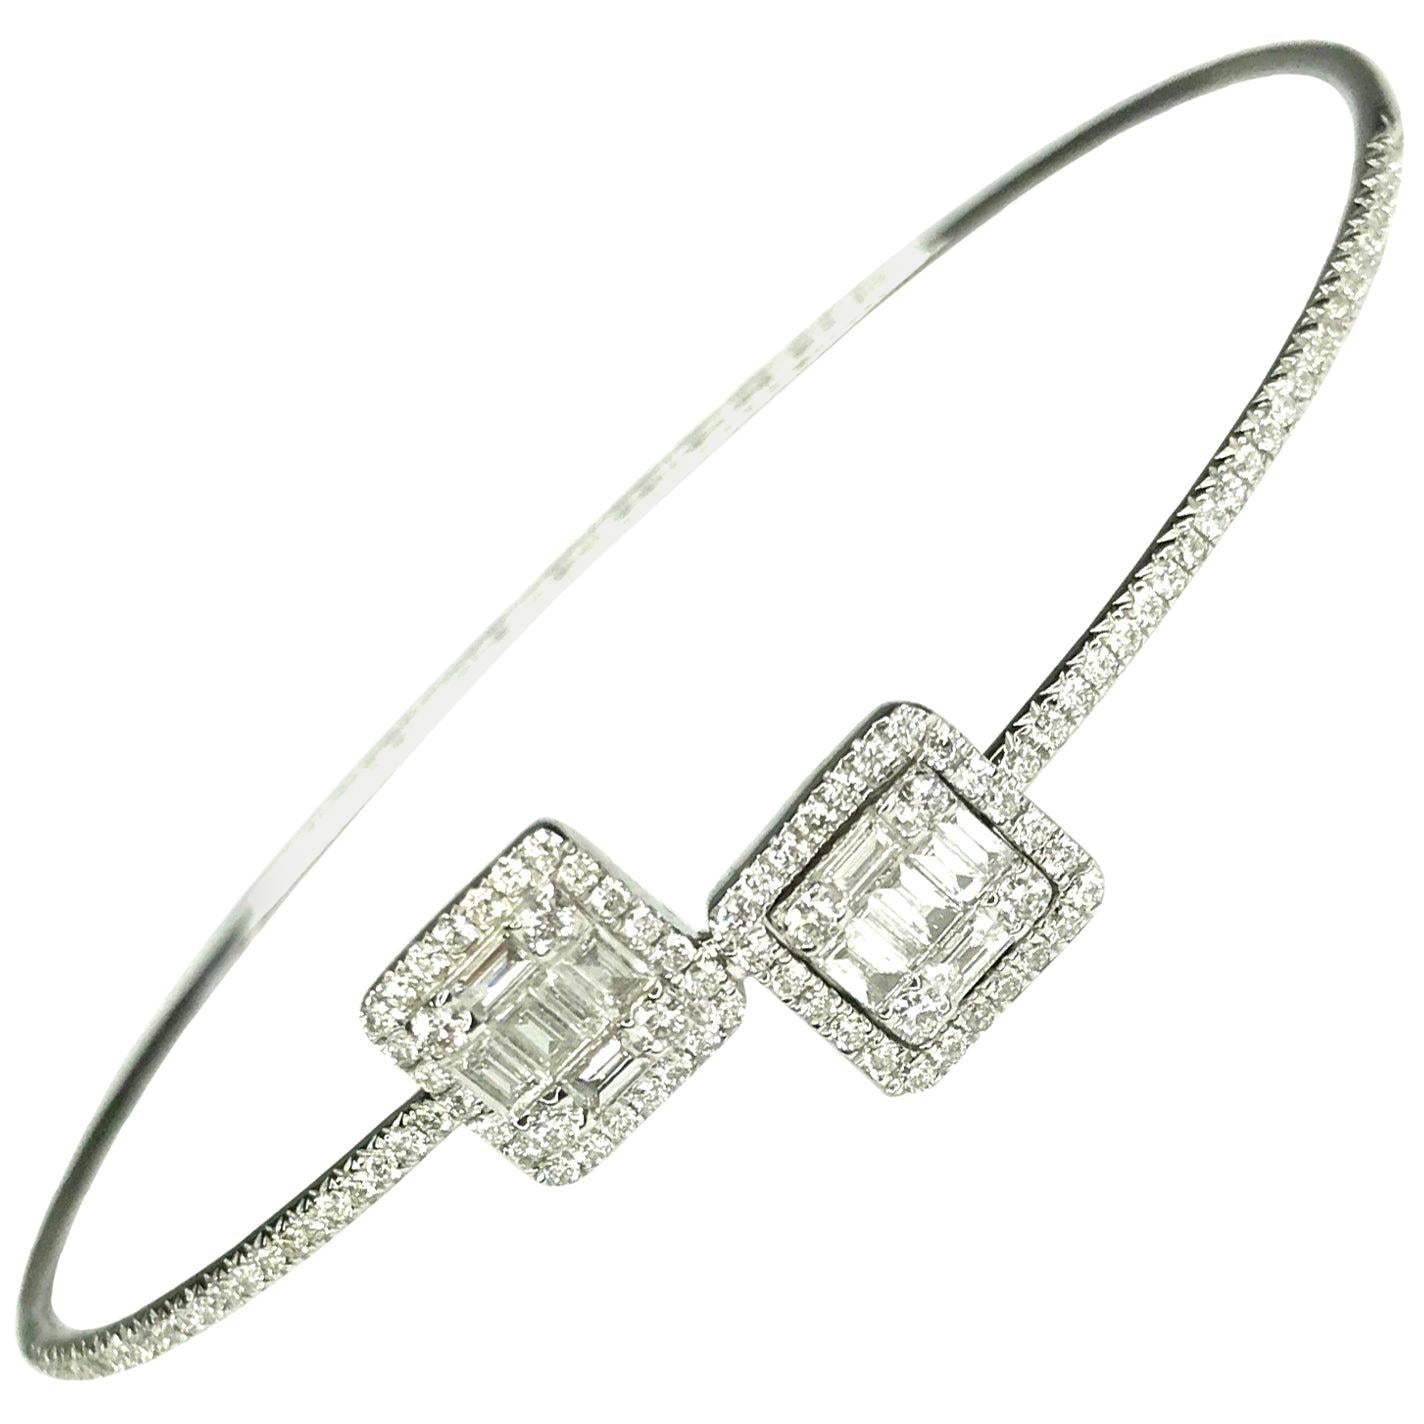 Gemolithos Modern White Gold 18 Karat and Diamond Bracelet for Every Day